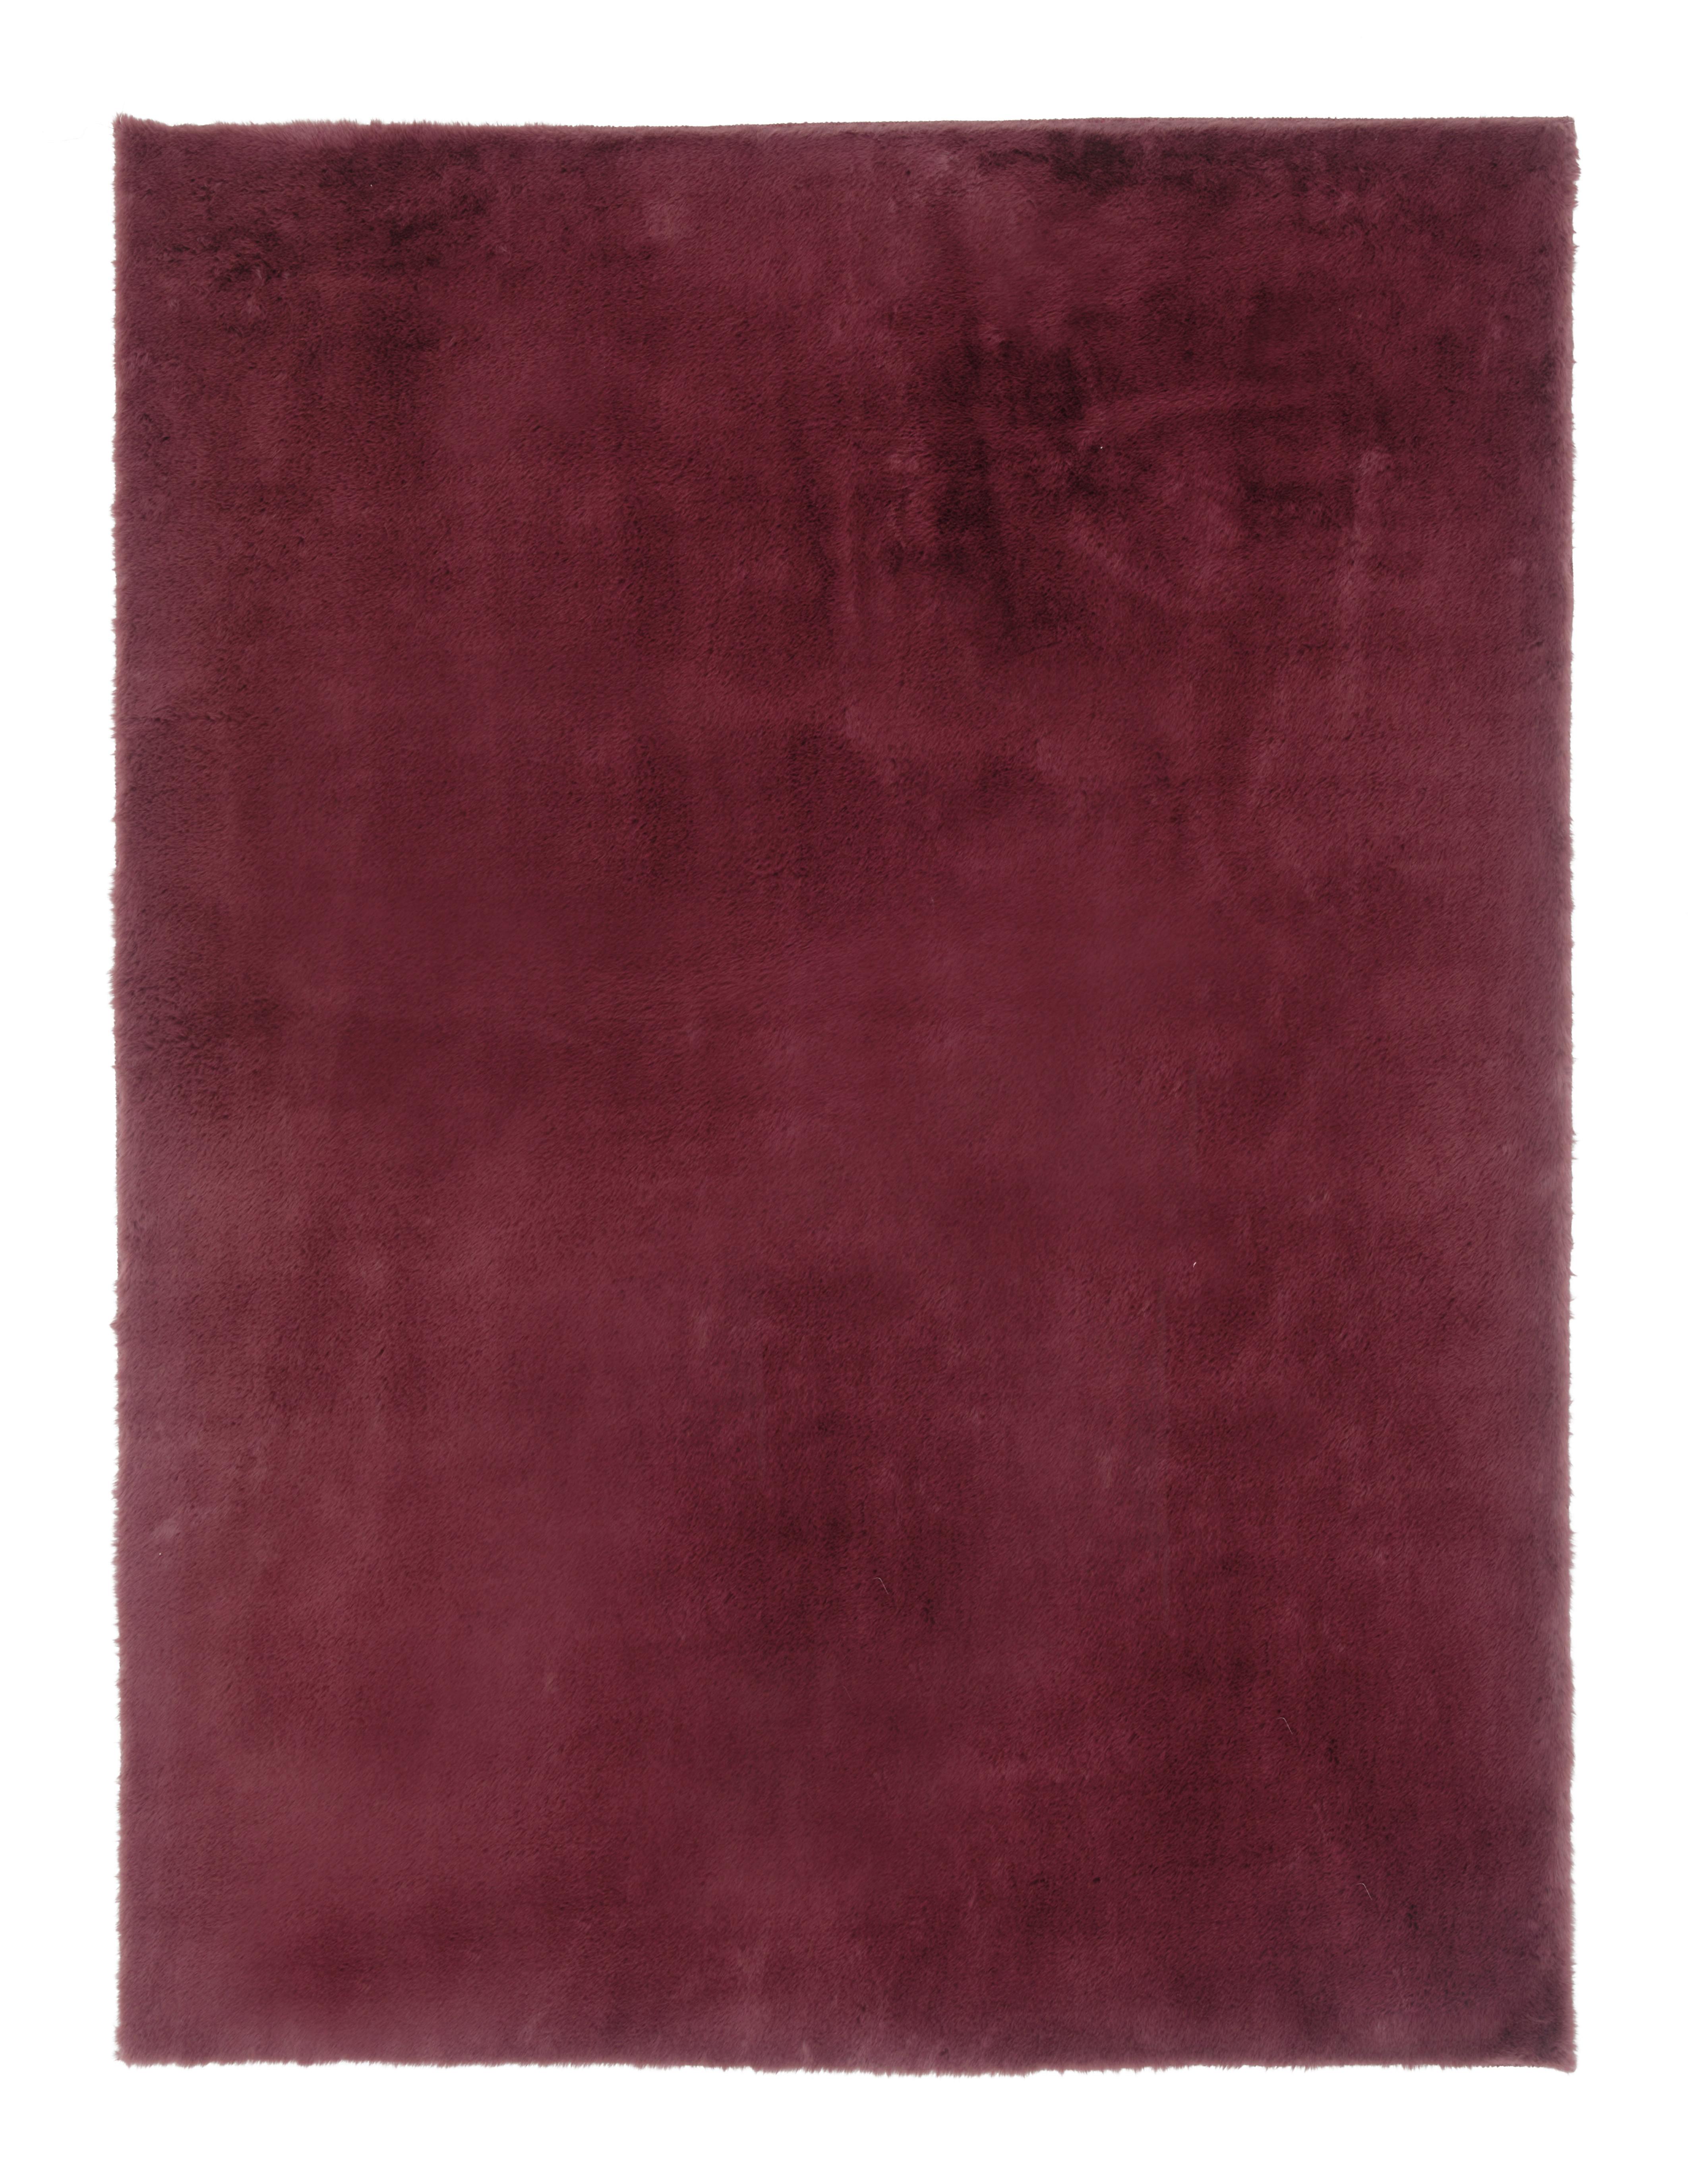 Kunstfell Caroline 1 in Beere ca. 80x150cm - Beere, Textil (80/150cm) - Modern Living